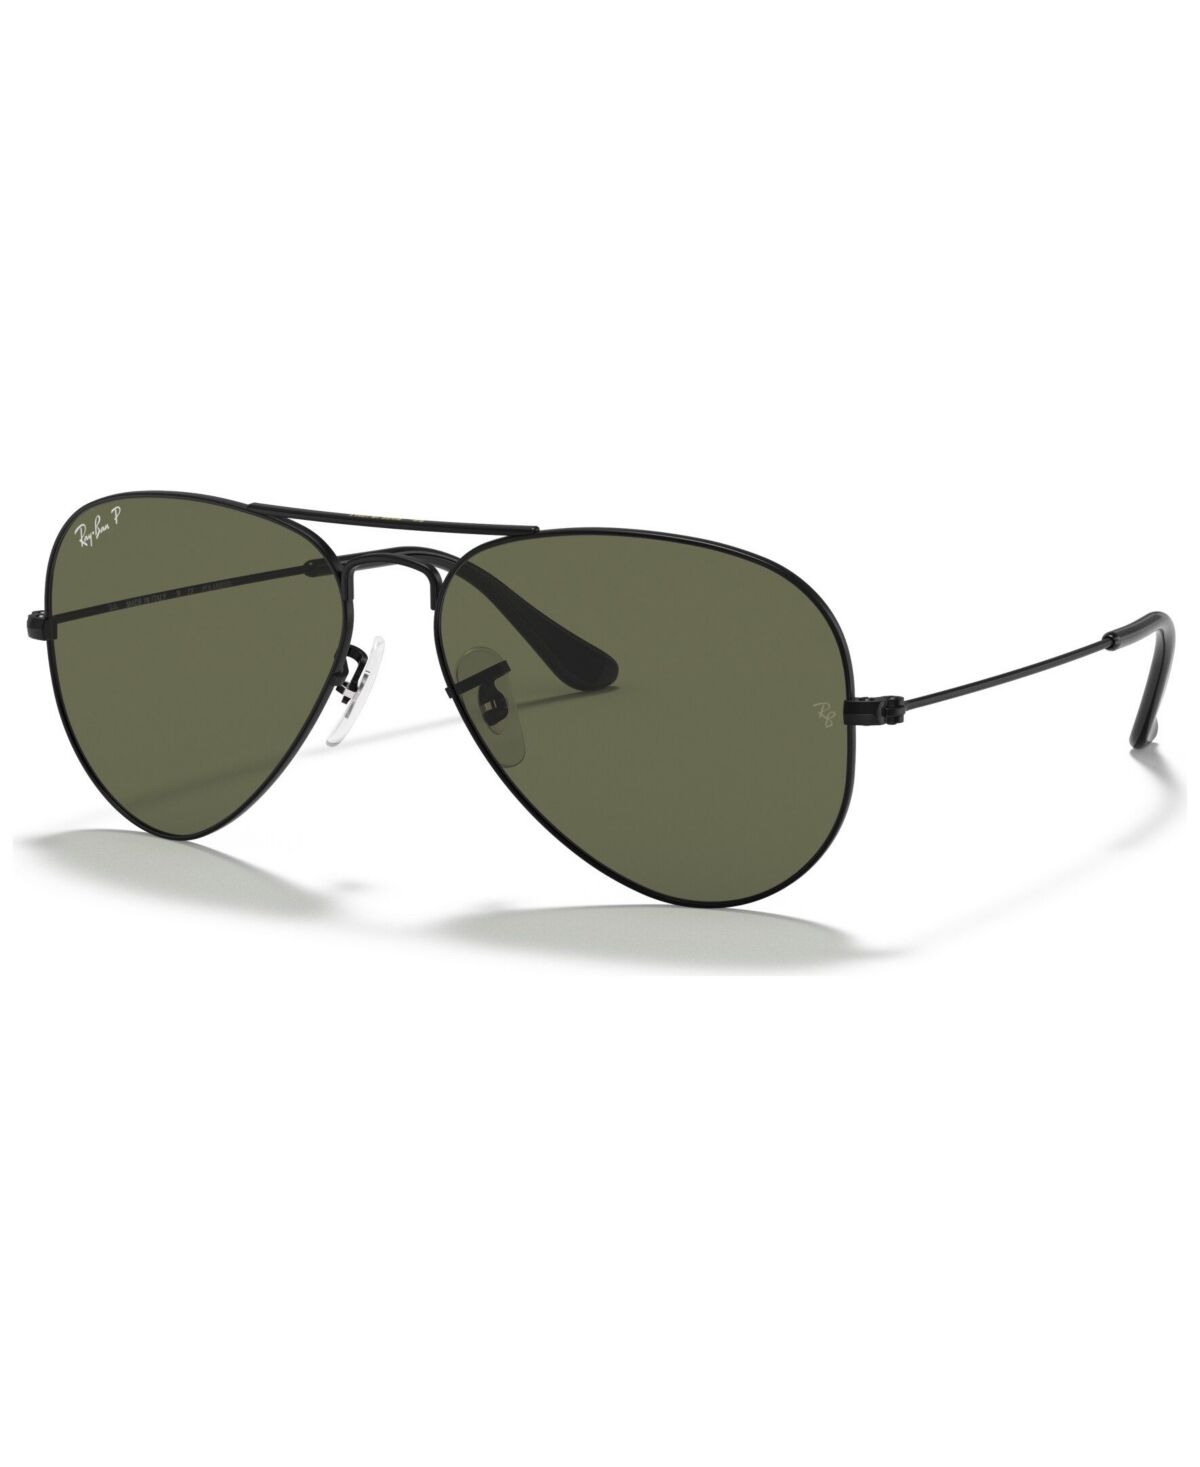 Ray-Ban Unisex Polarized Sunglasses, RB3025 Aviator Classic - BLACK/GREEN POLAR